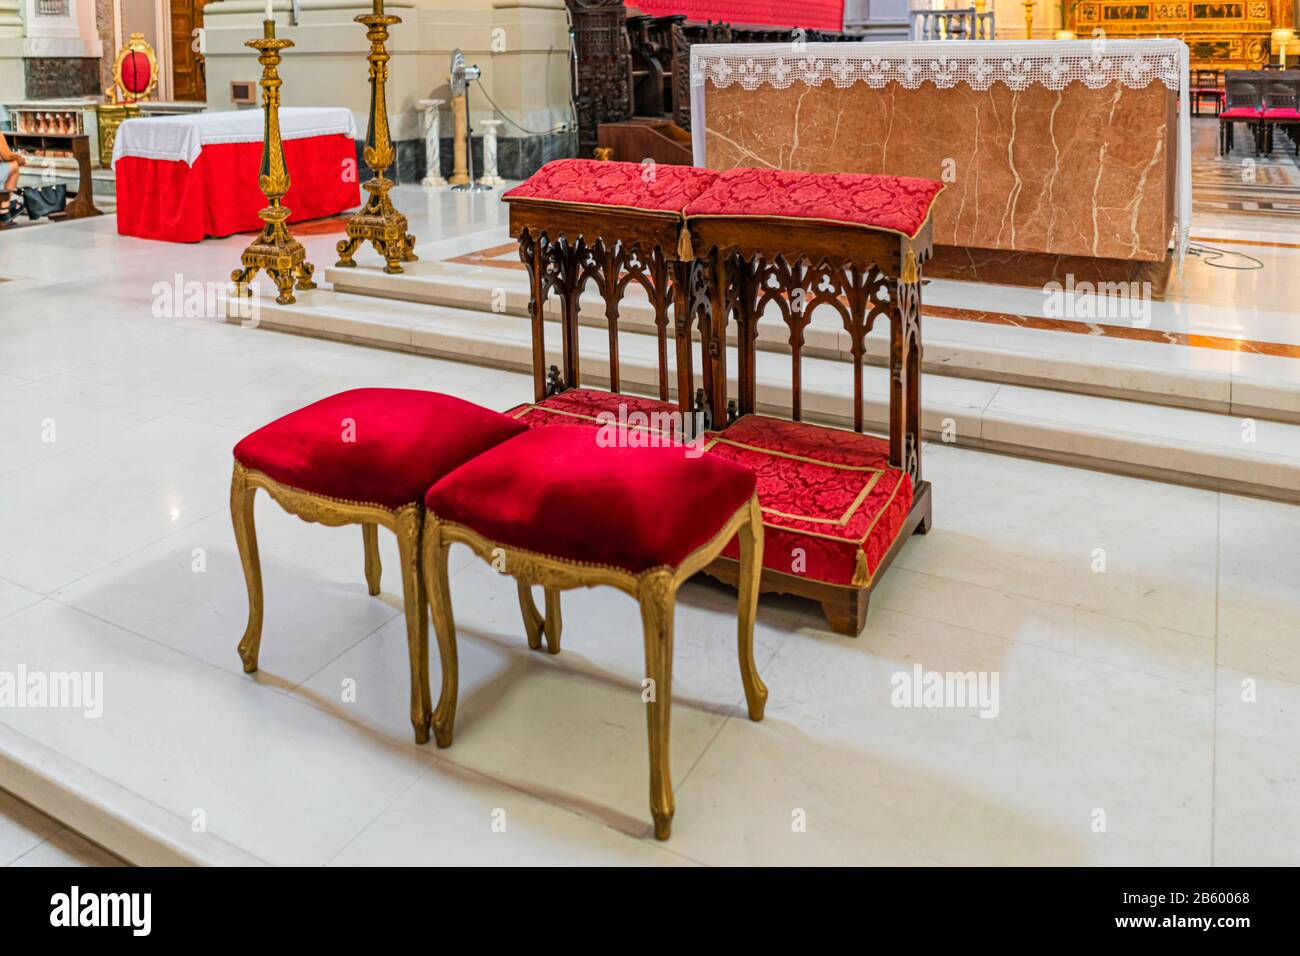 Matrimonio inginocchiatore e sedie nella chiesa cattolica Foto Stock